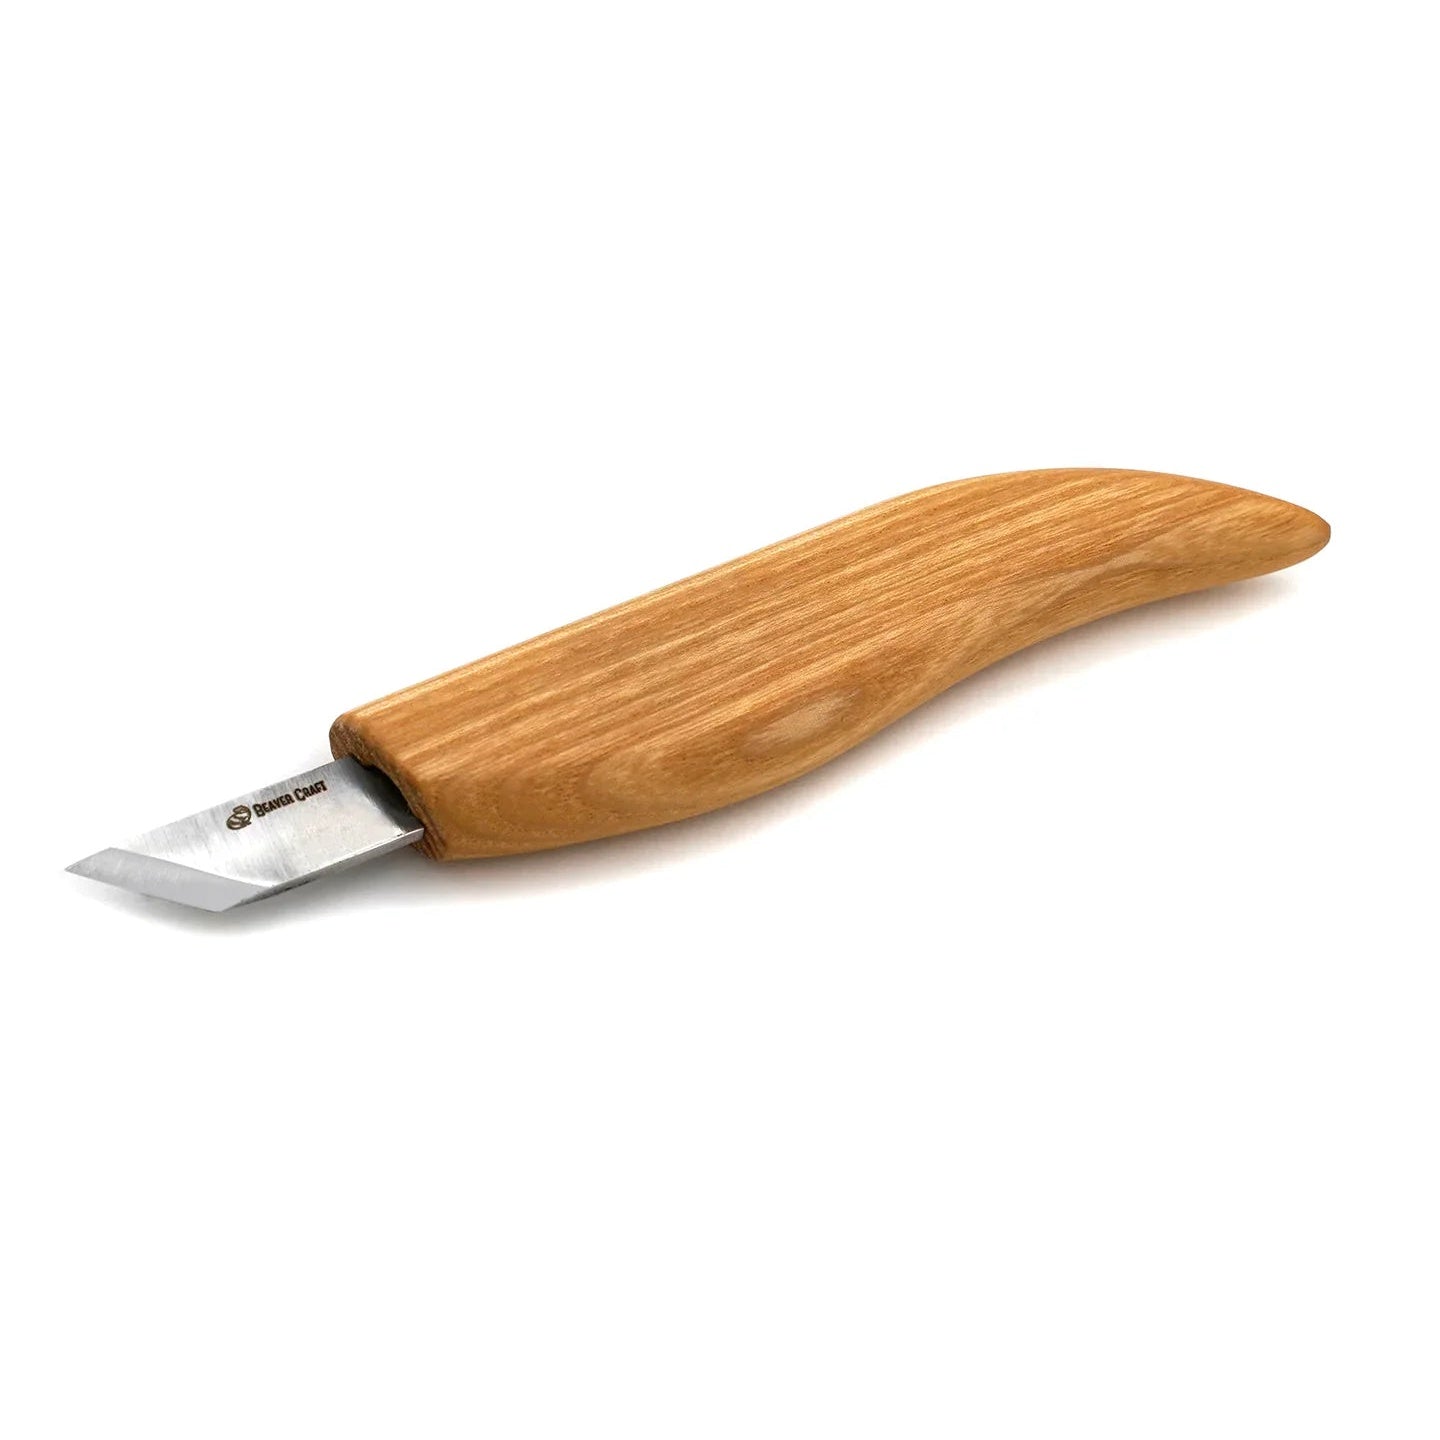 C12 - Chip Carving Knife